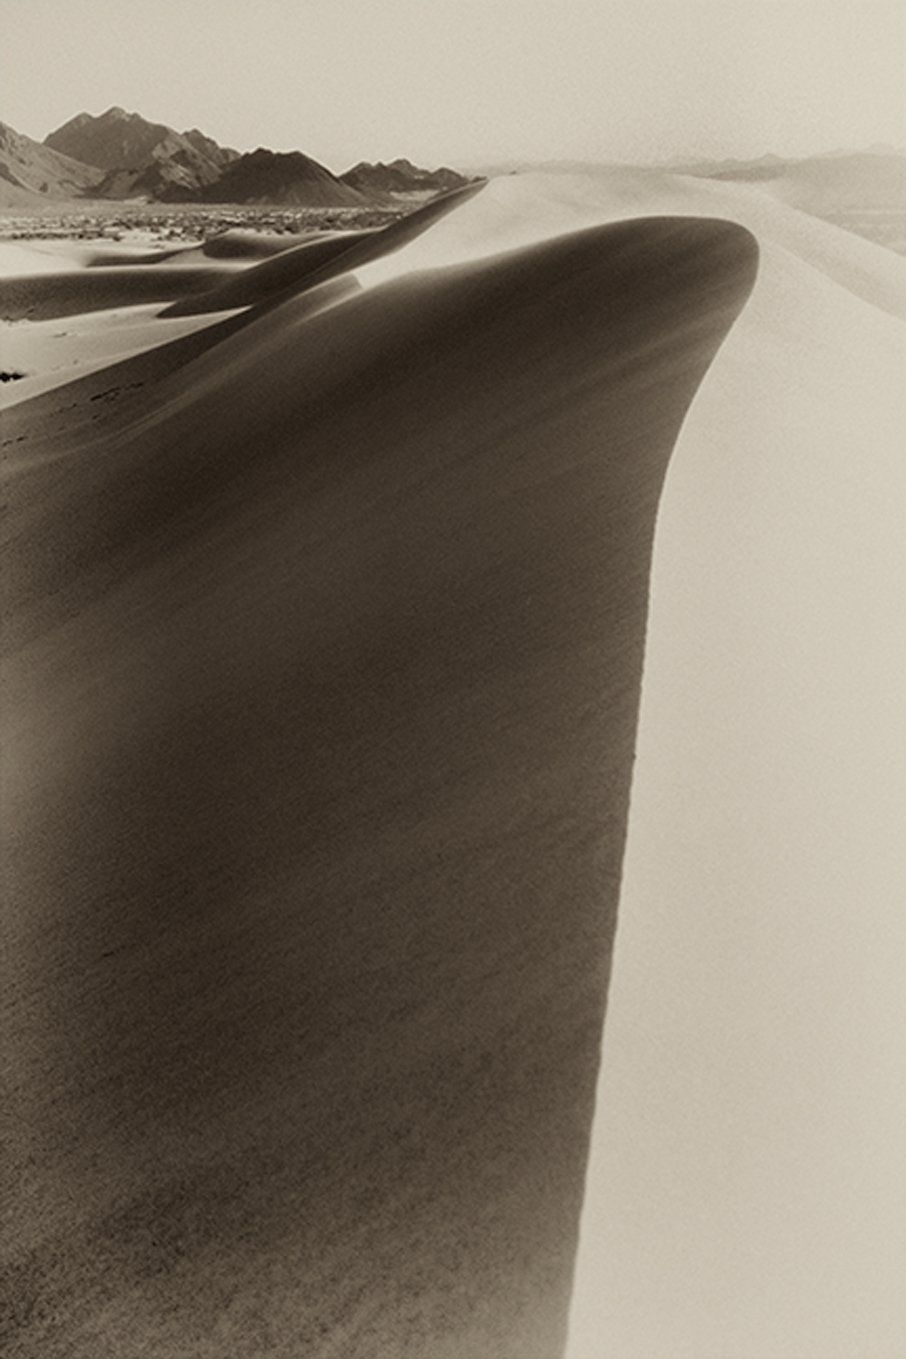 Dune & Mountains Baja MX